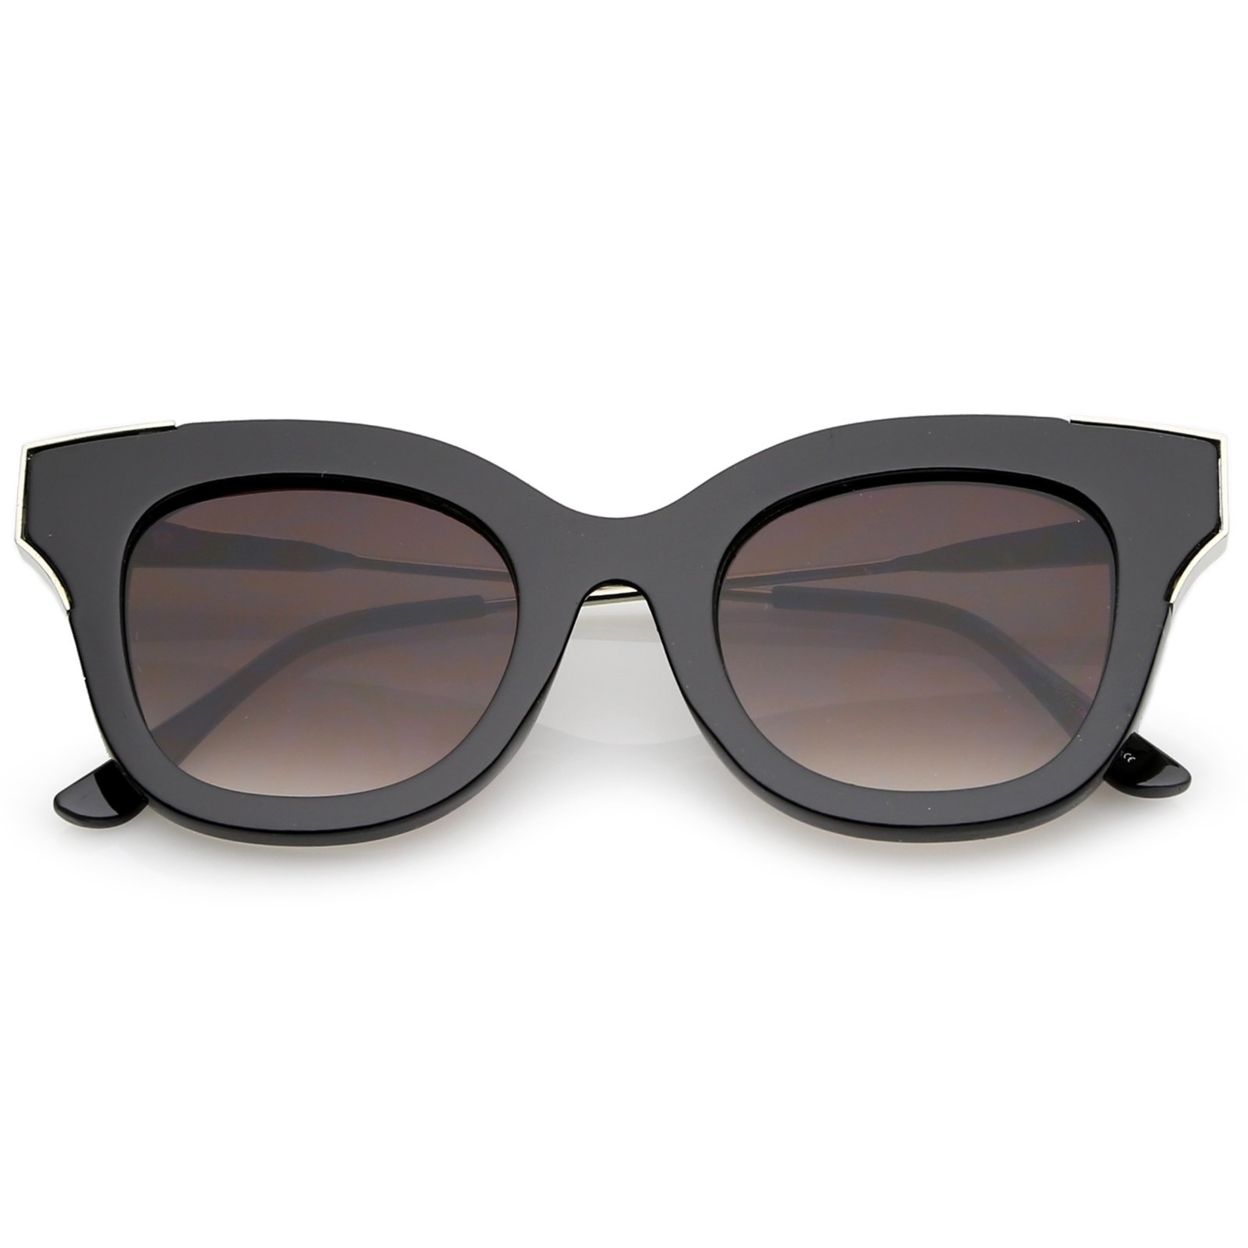 Oversize Thick Slim Temple Metal Trim Square Flat Lens Cat Eye Sunglasses 48mm - Tortoise-Gold / Amber